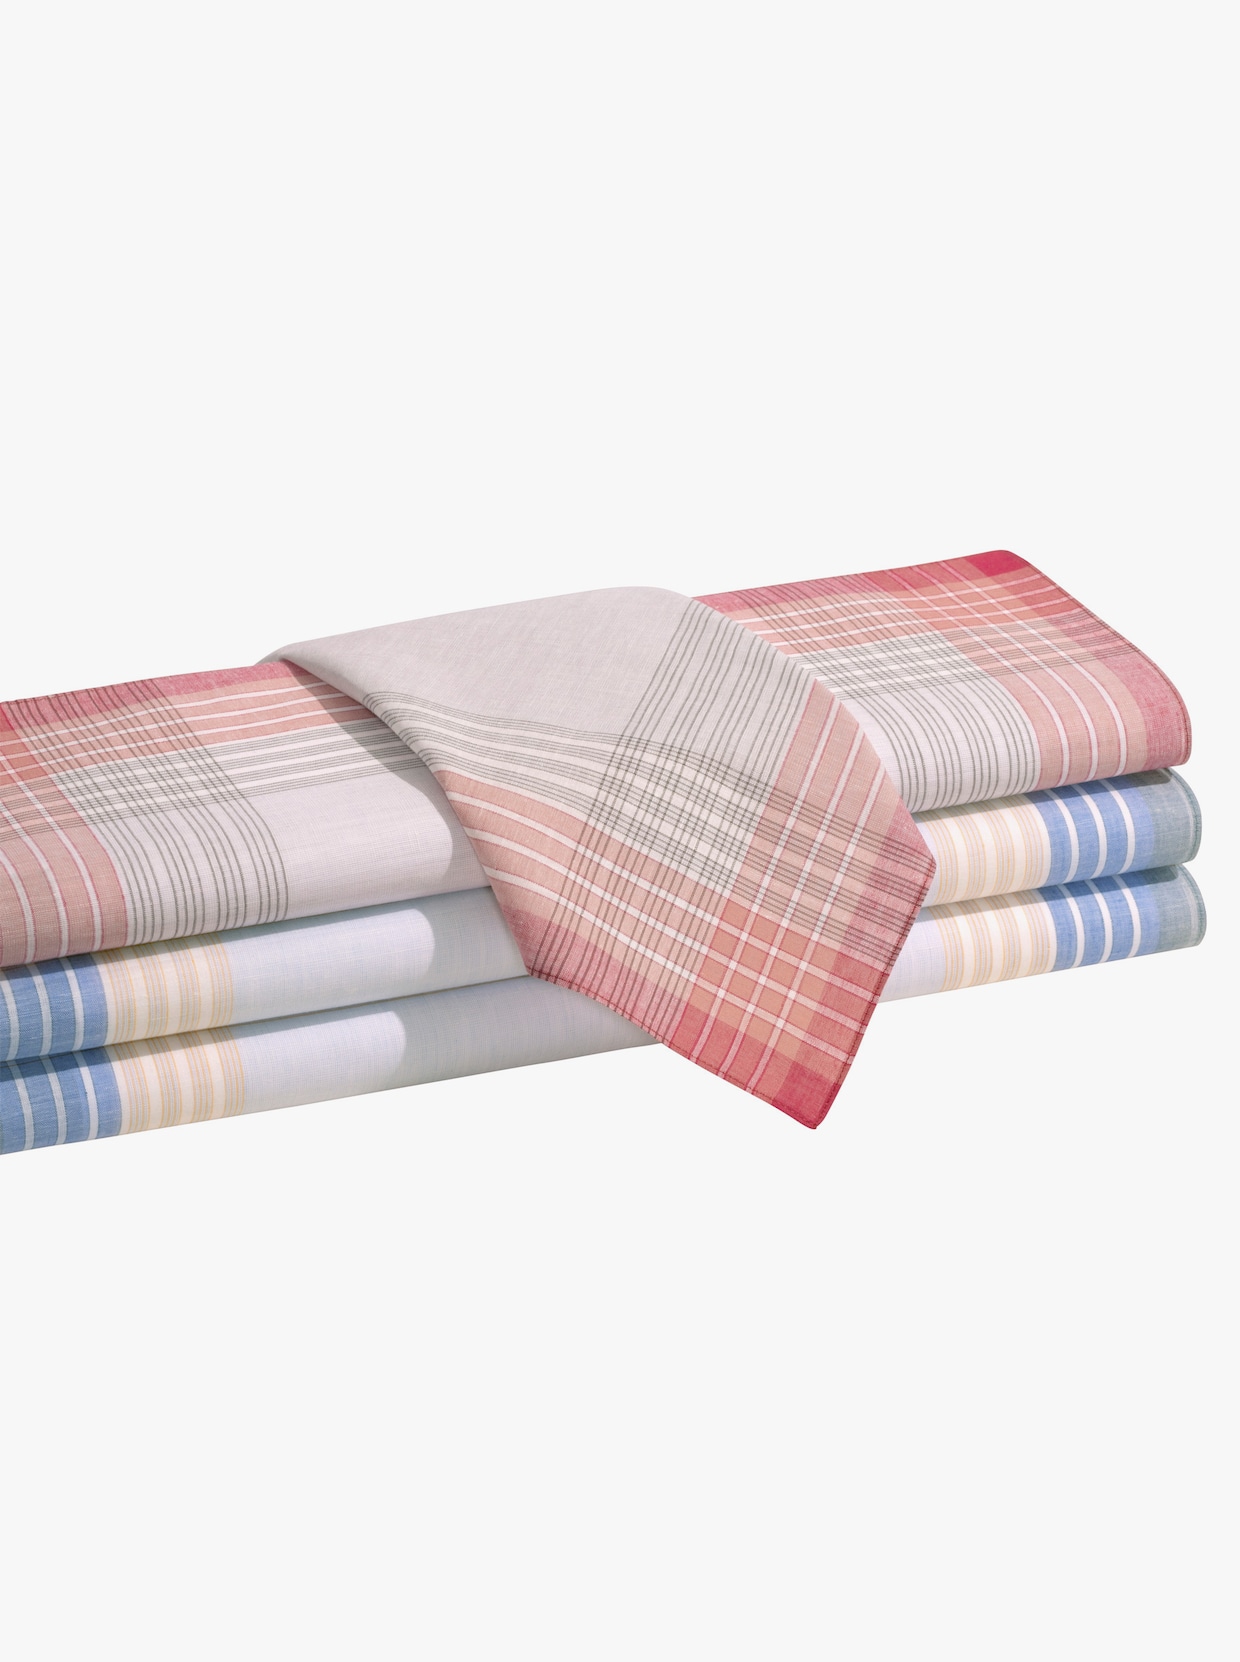 Herren-Taschentücher - farbig-sortiert